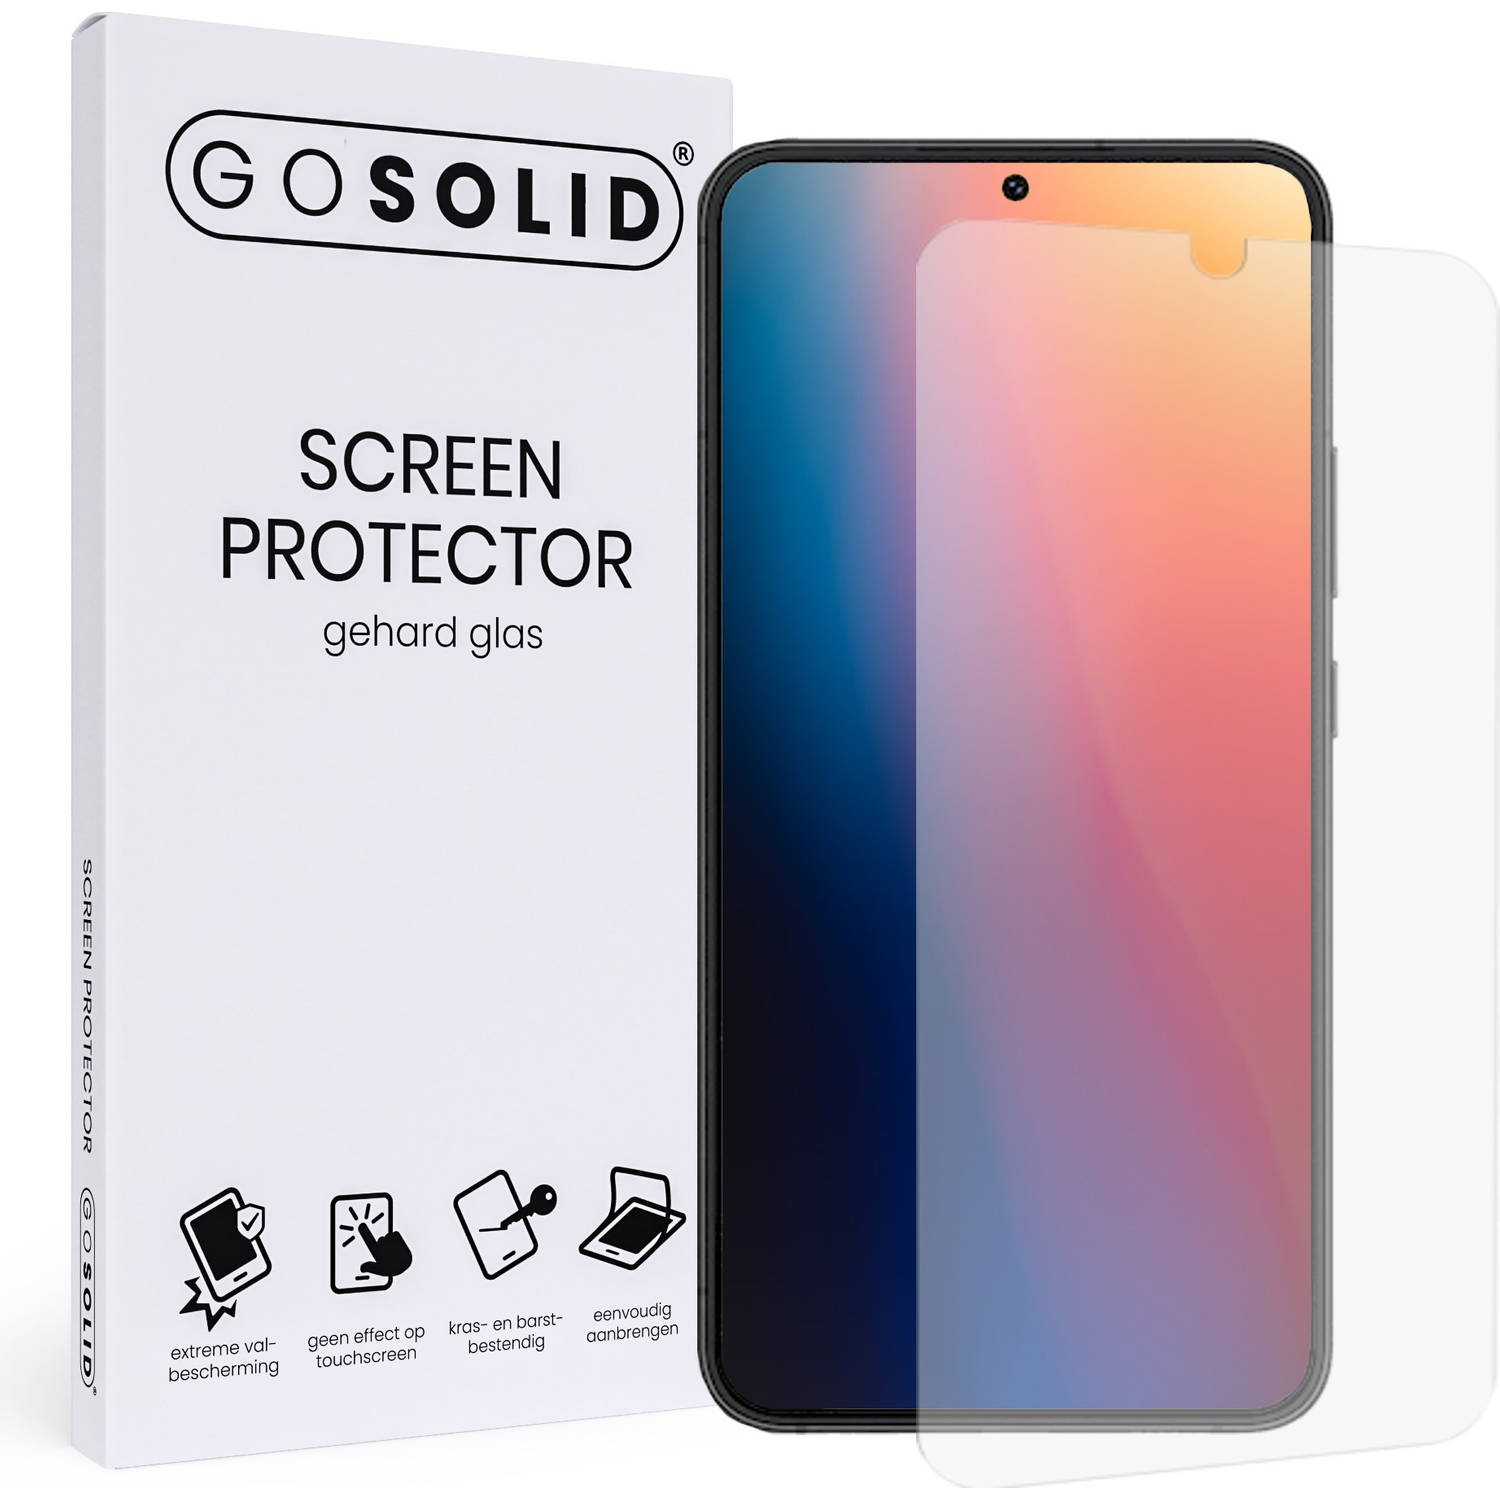 Go Solid! Screenprotector Voor Samsung Galaxy A82 5g-quantm 2 5g